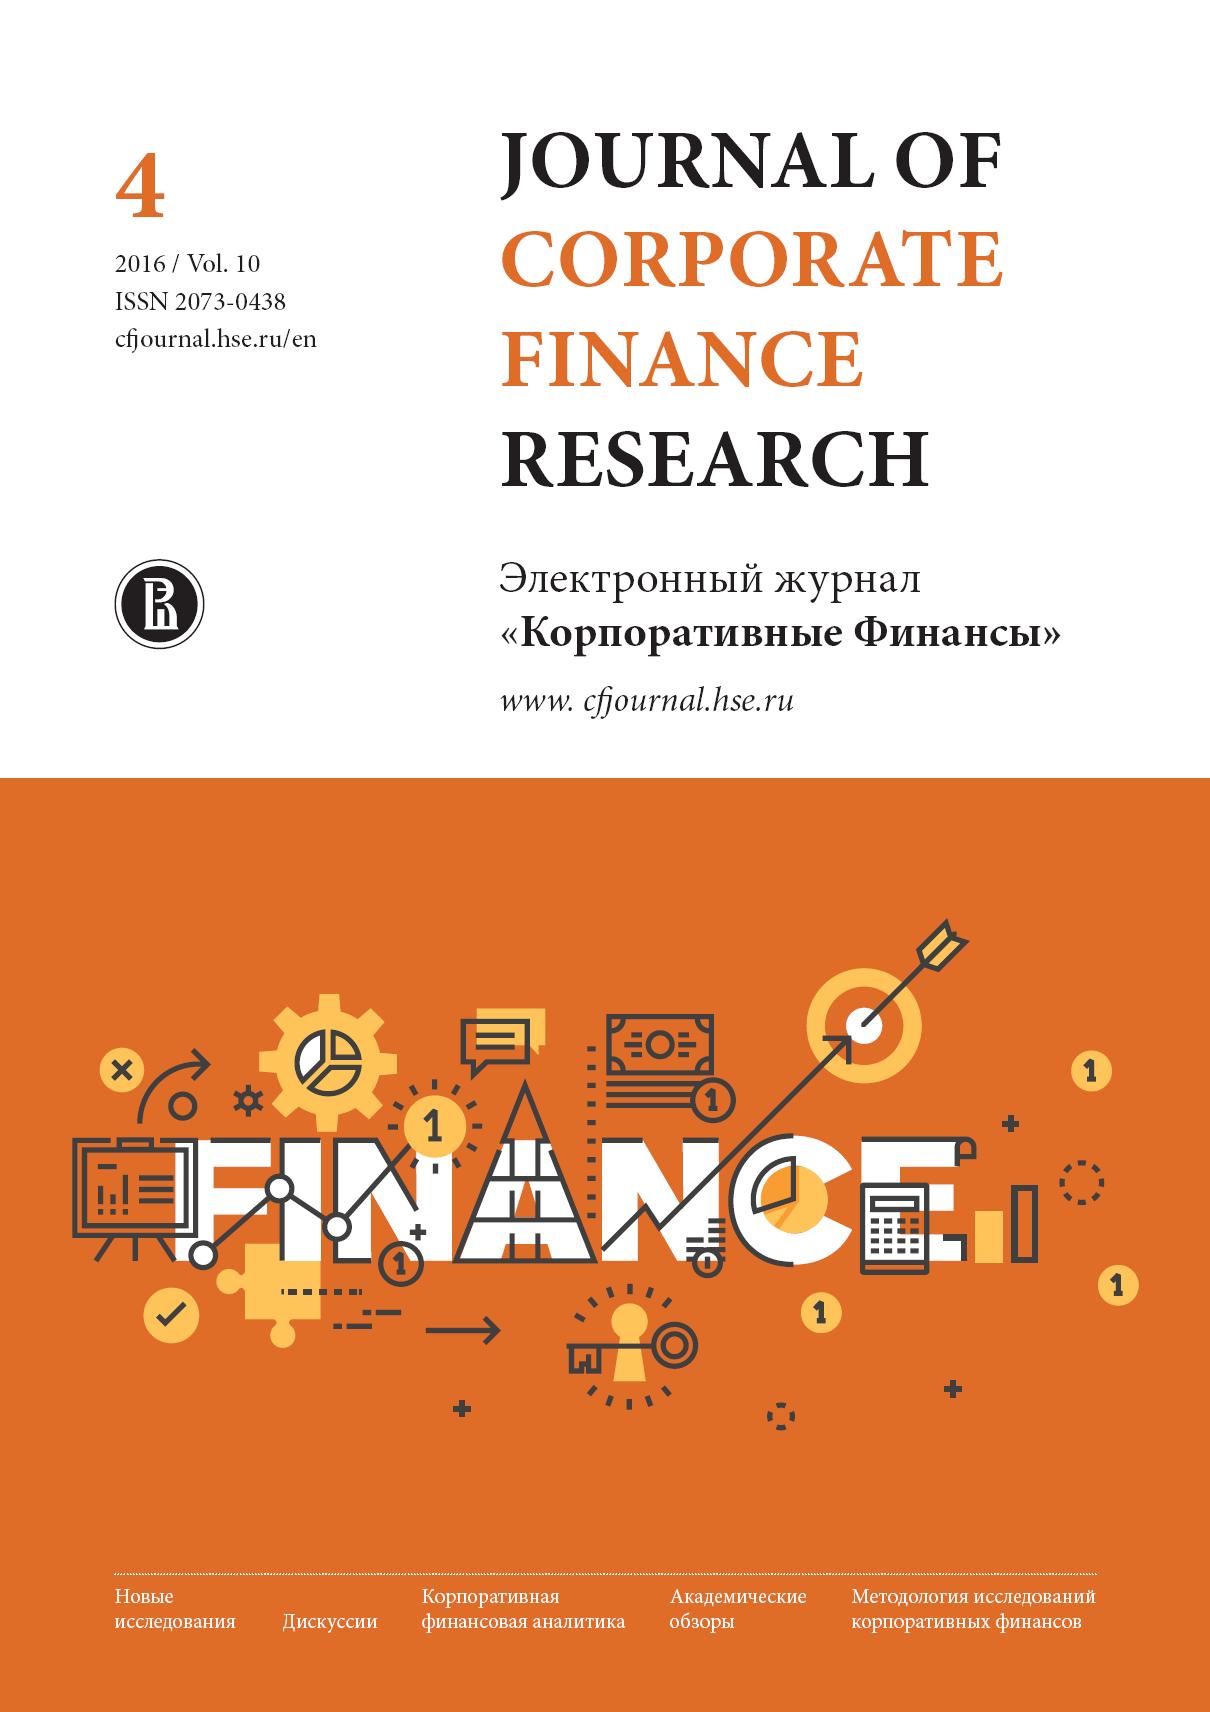 Электронный журнал "Корпоративные финансы"